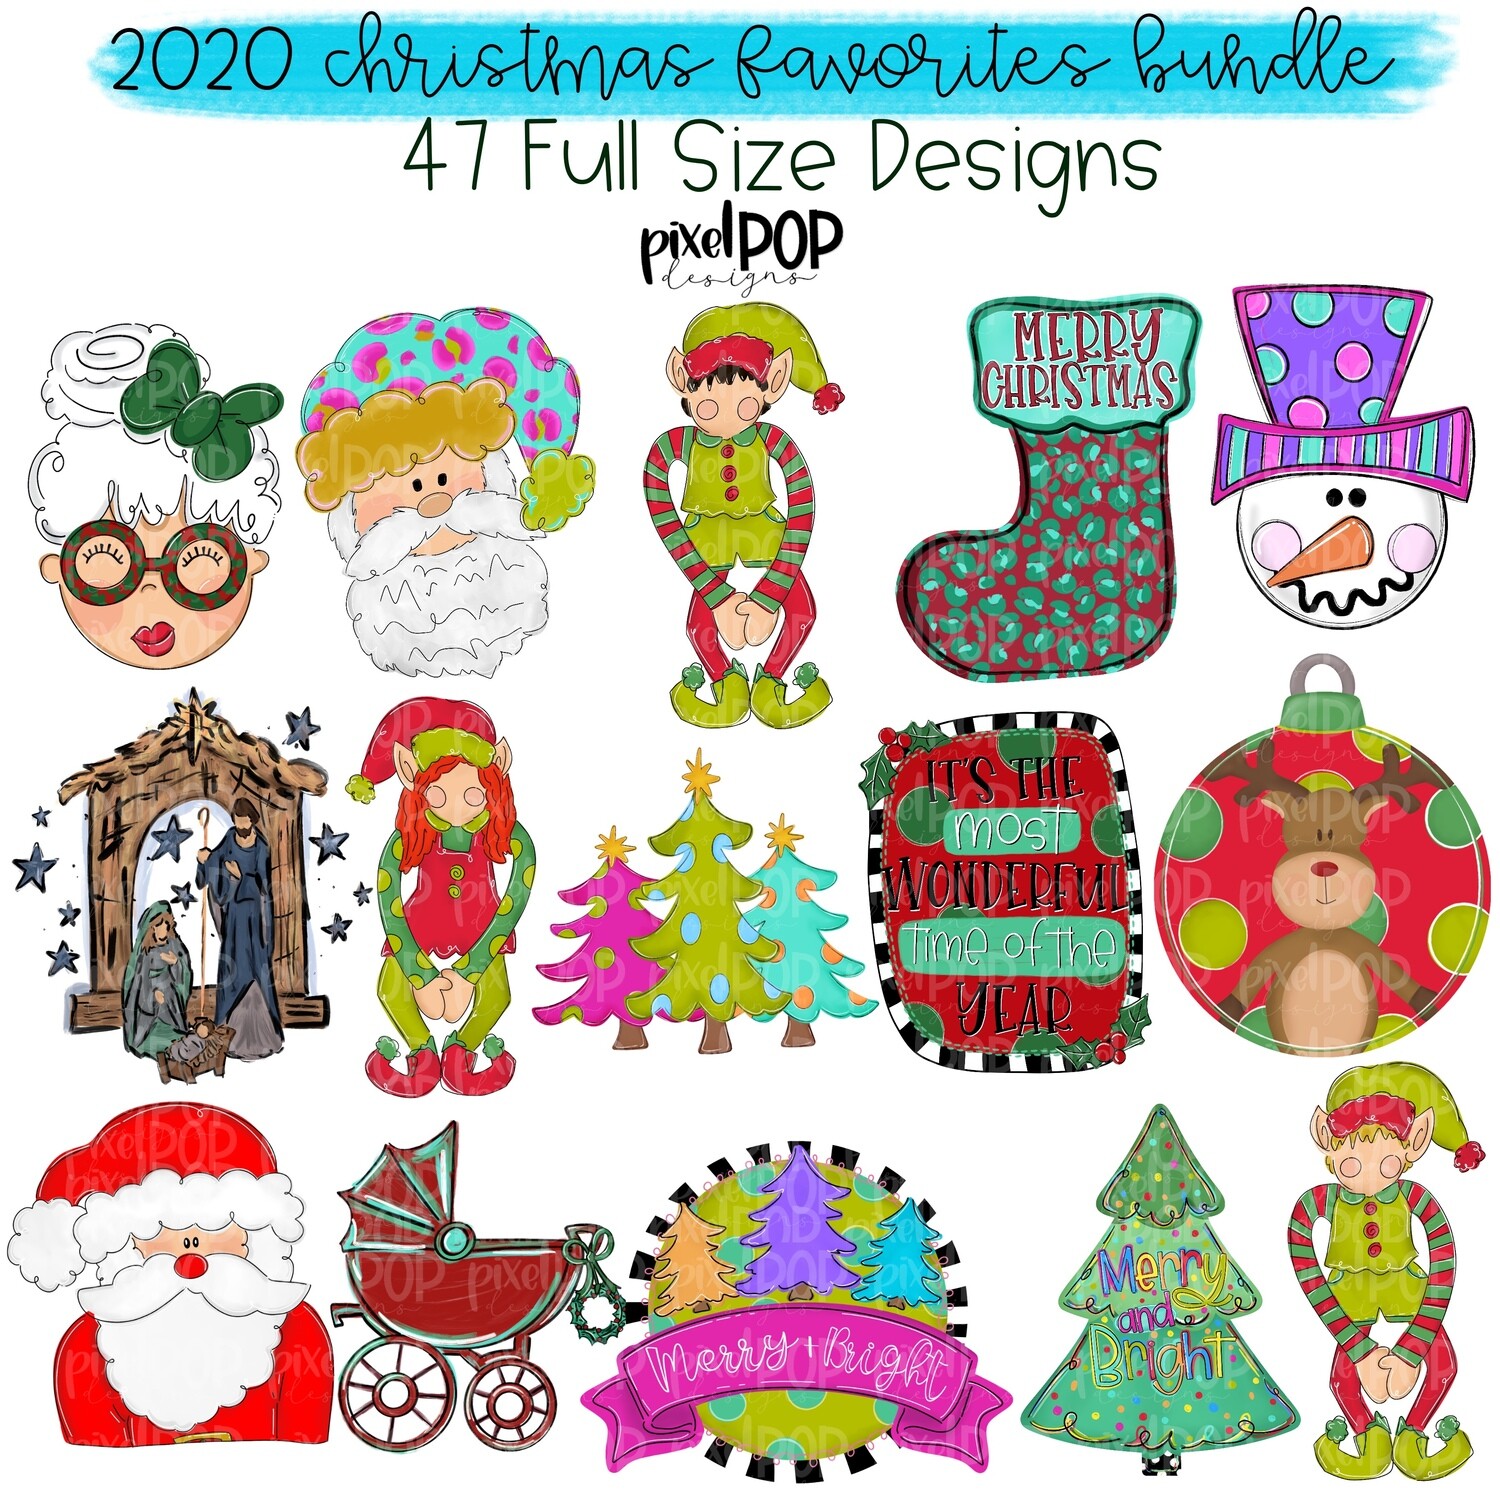 2020 Christmas Favorites Bundle (47 PNG Files)